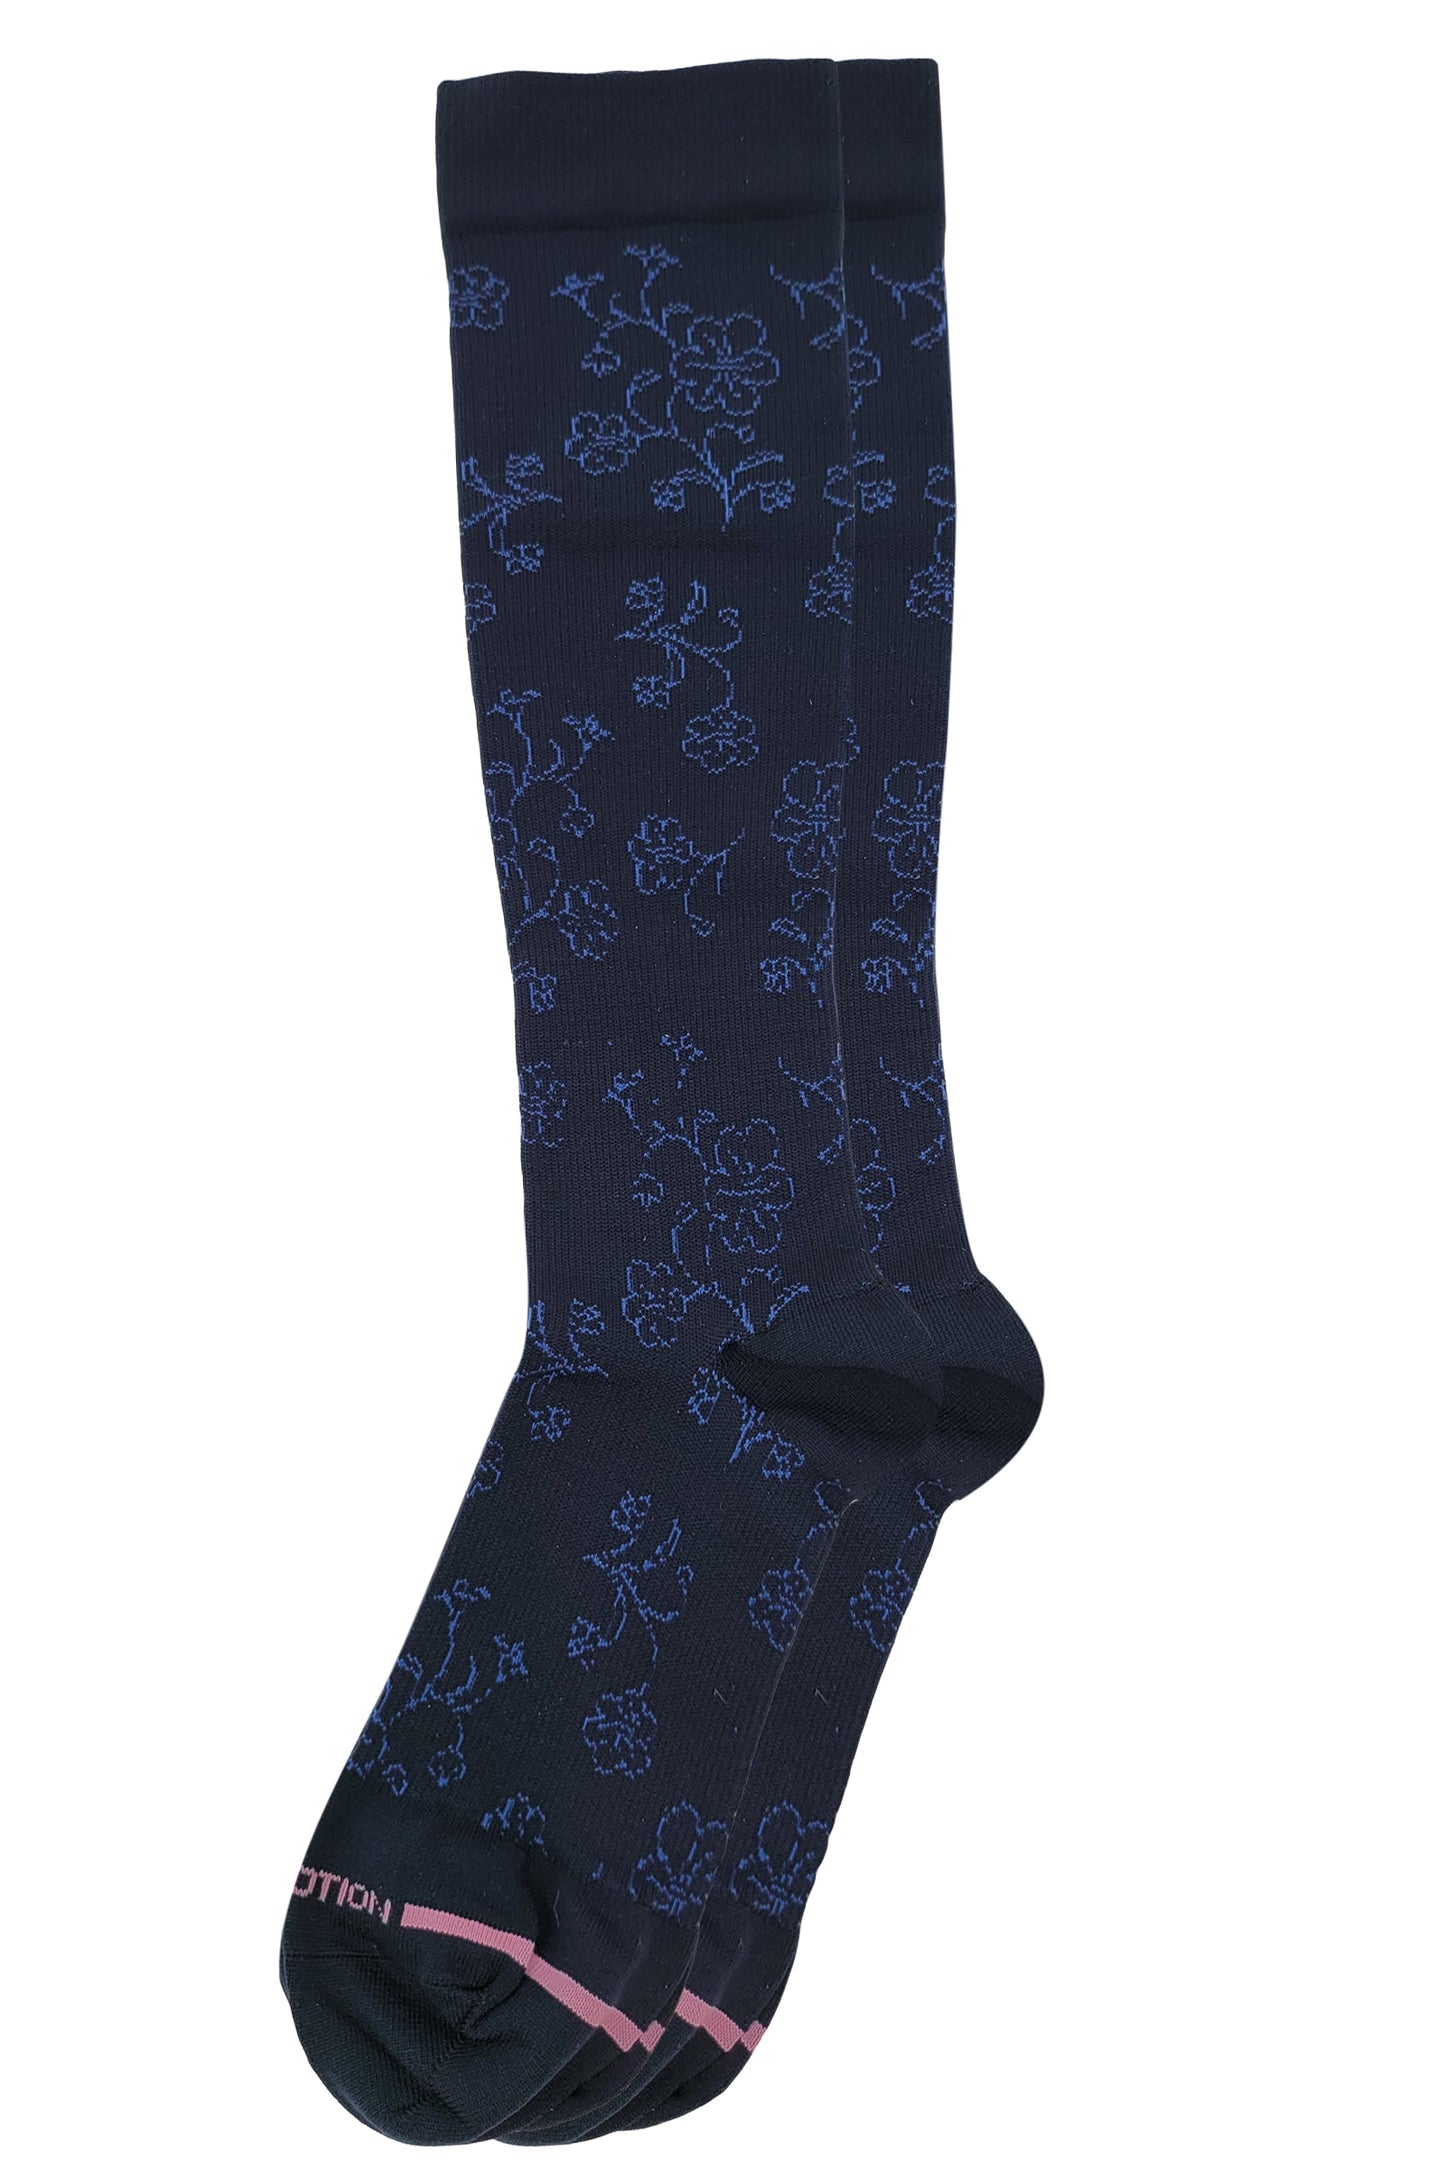 Knee High Compression Socks | Floral Pattern Design | Women's (1 Pair)